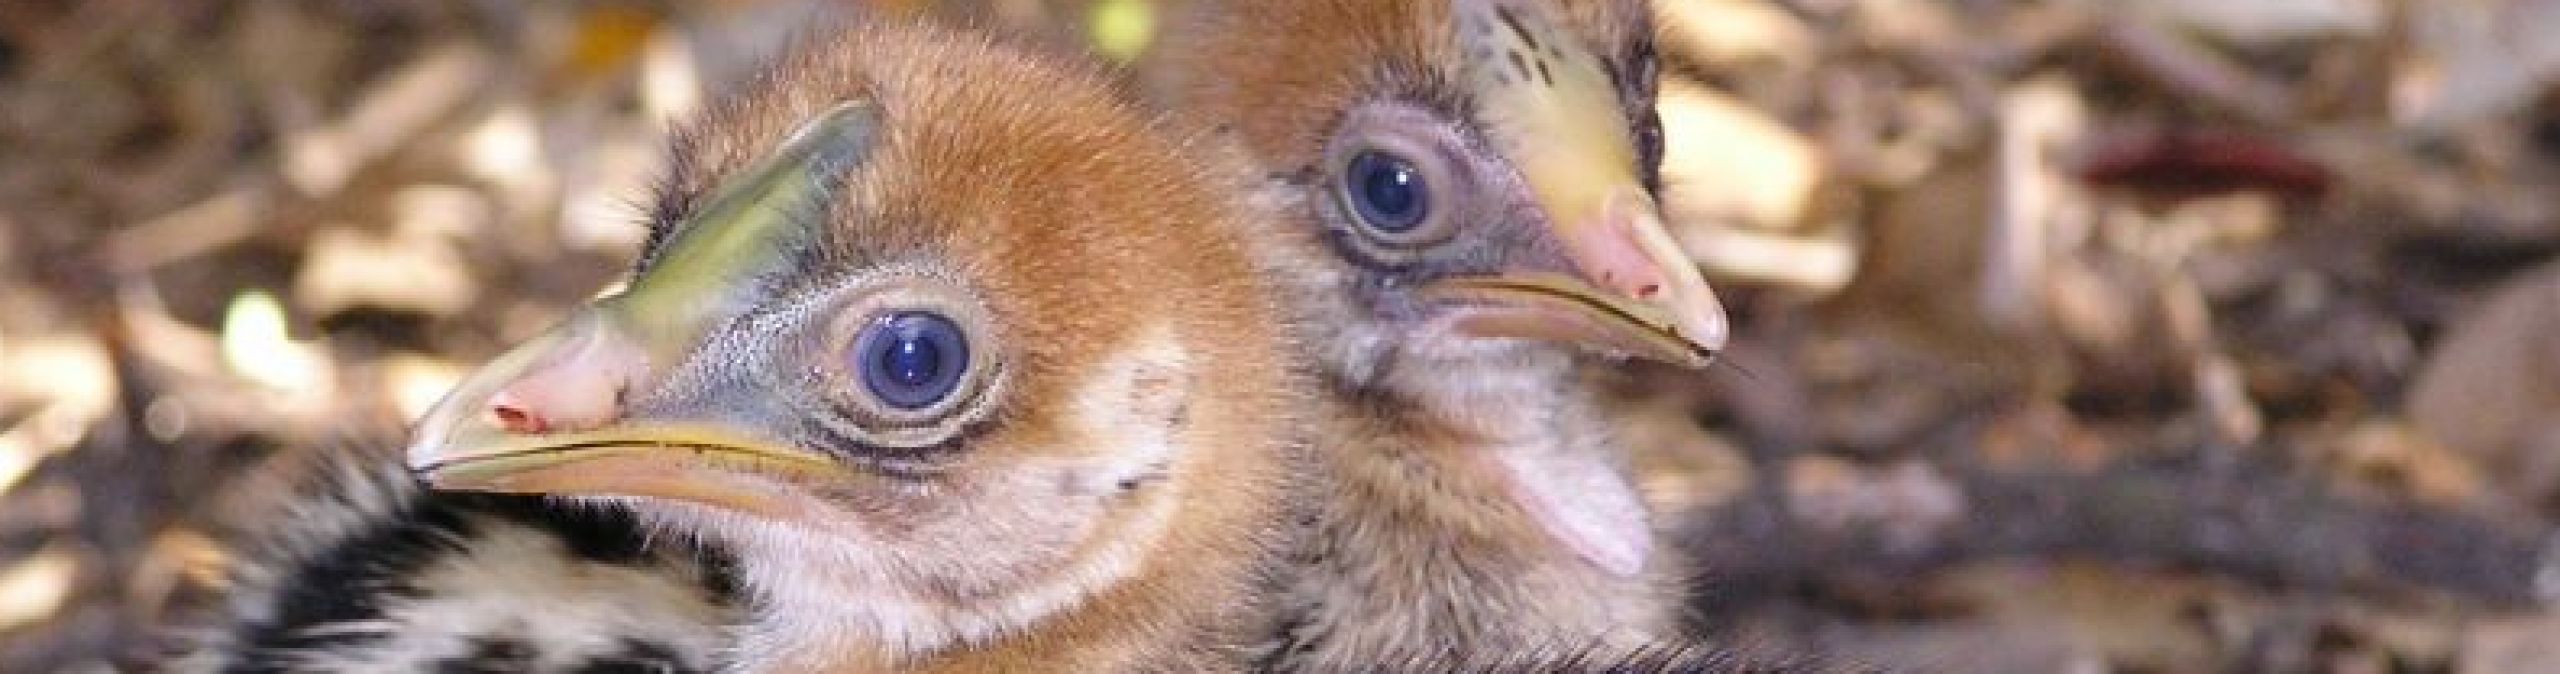 Cassowary chicks
Photographer: EPA